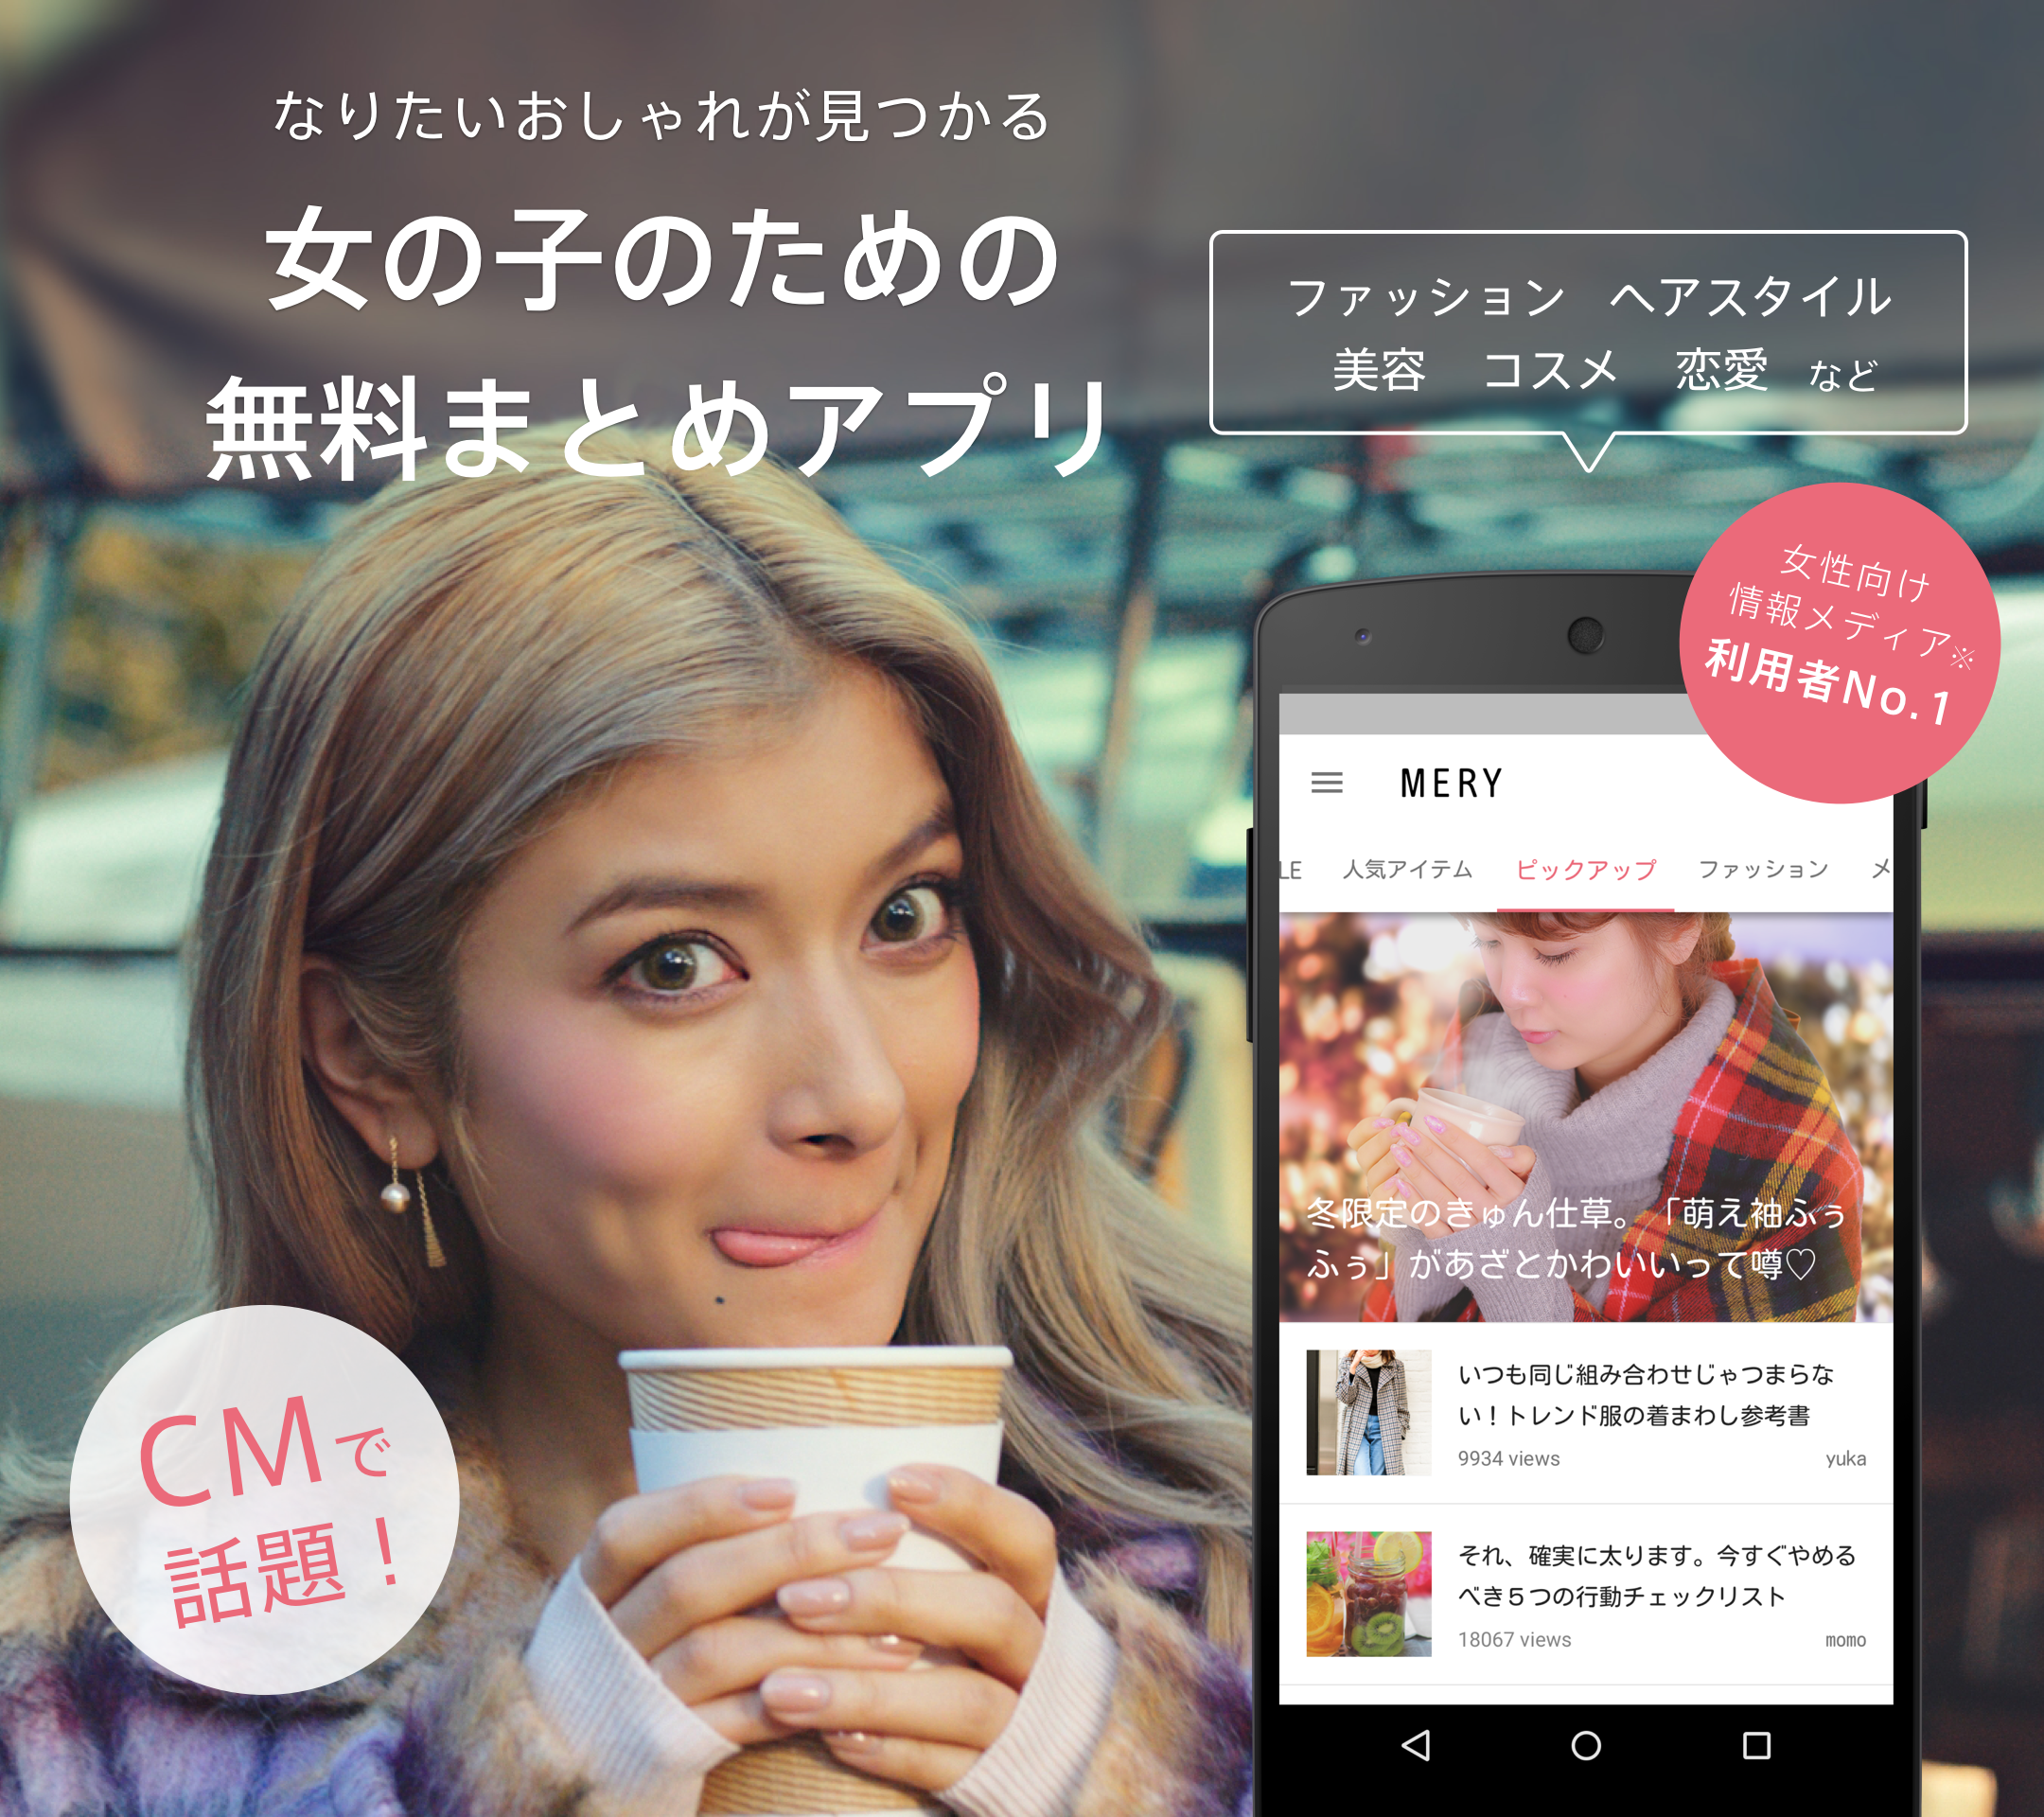 Android application MERY［メリー］- 女の子のための無料まとめアプリ screenshort